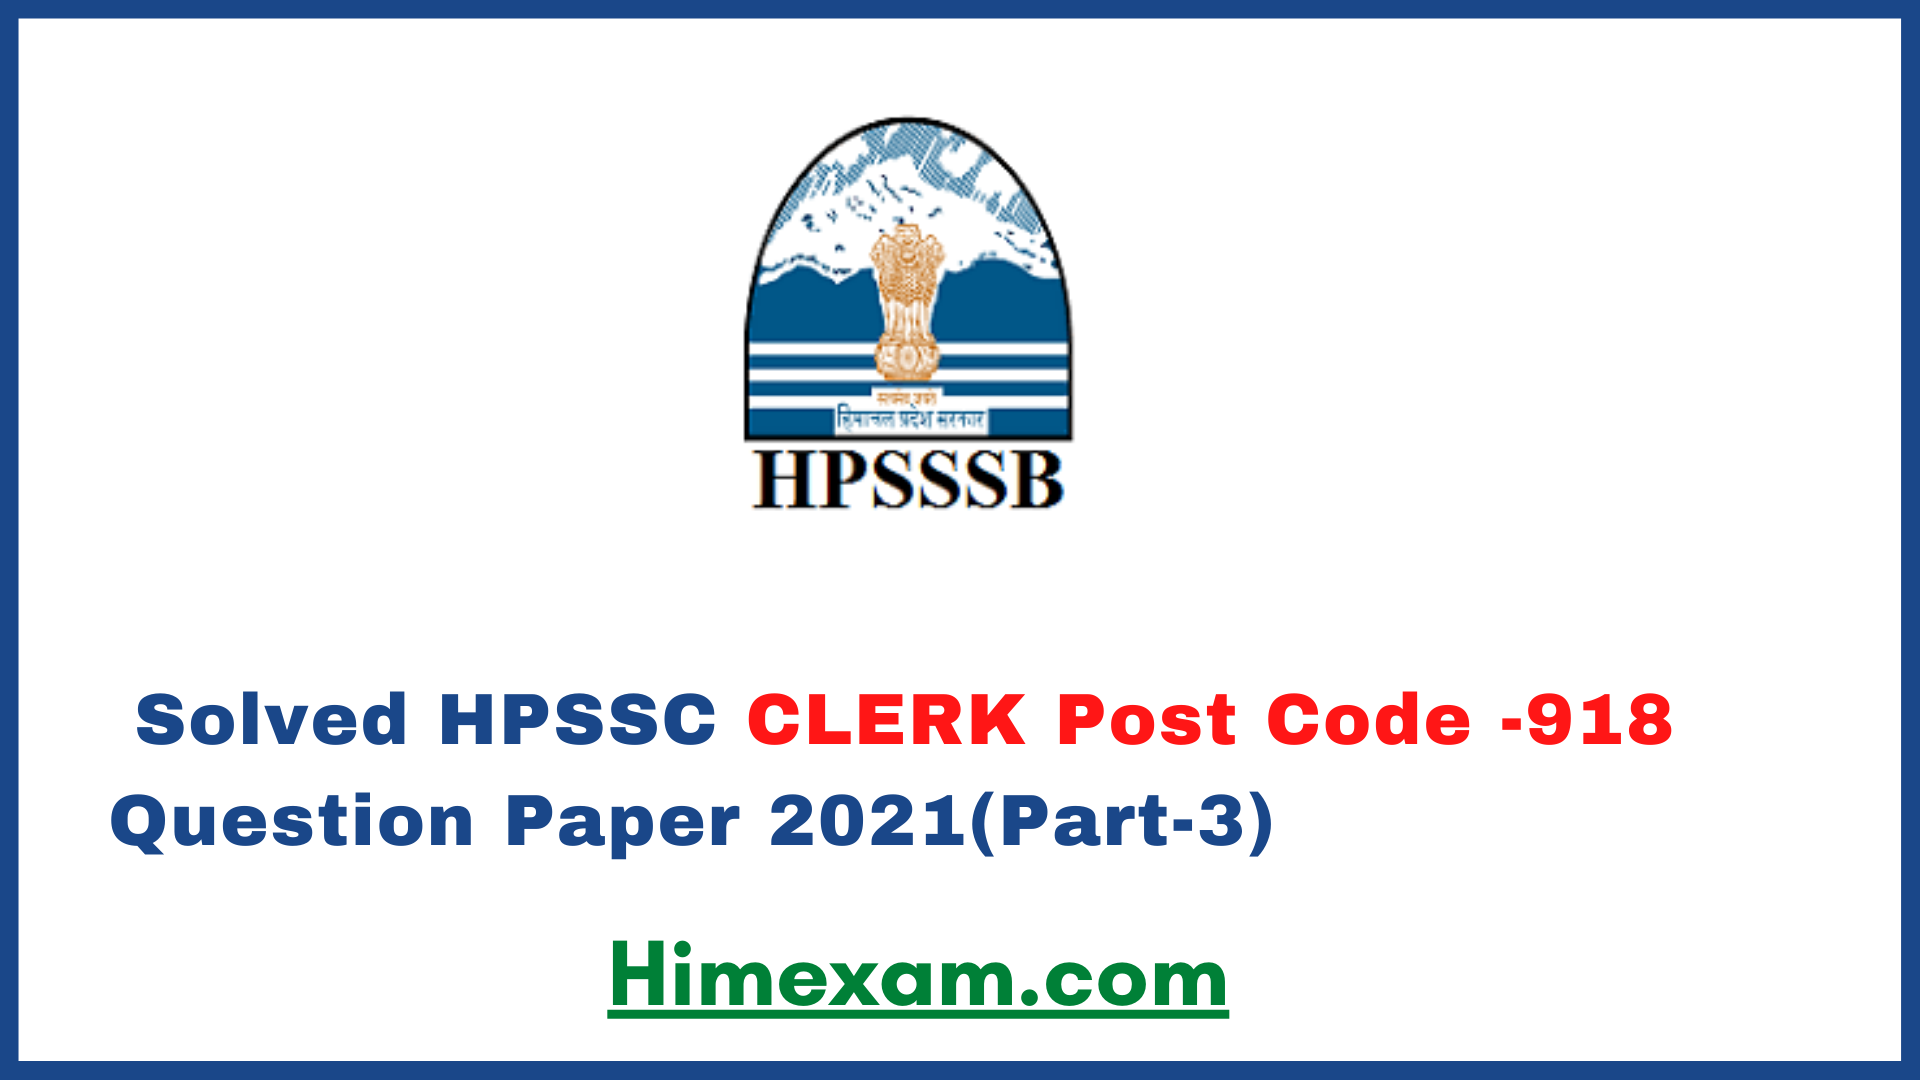 Solved HPSSC CLERK Post Code -918 Question Paper 2021(Part-3)